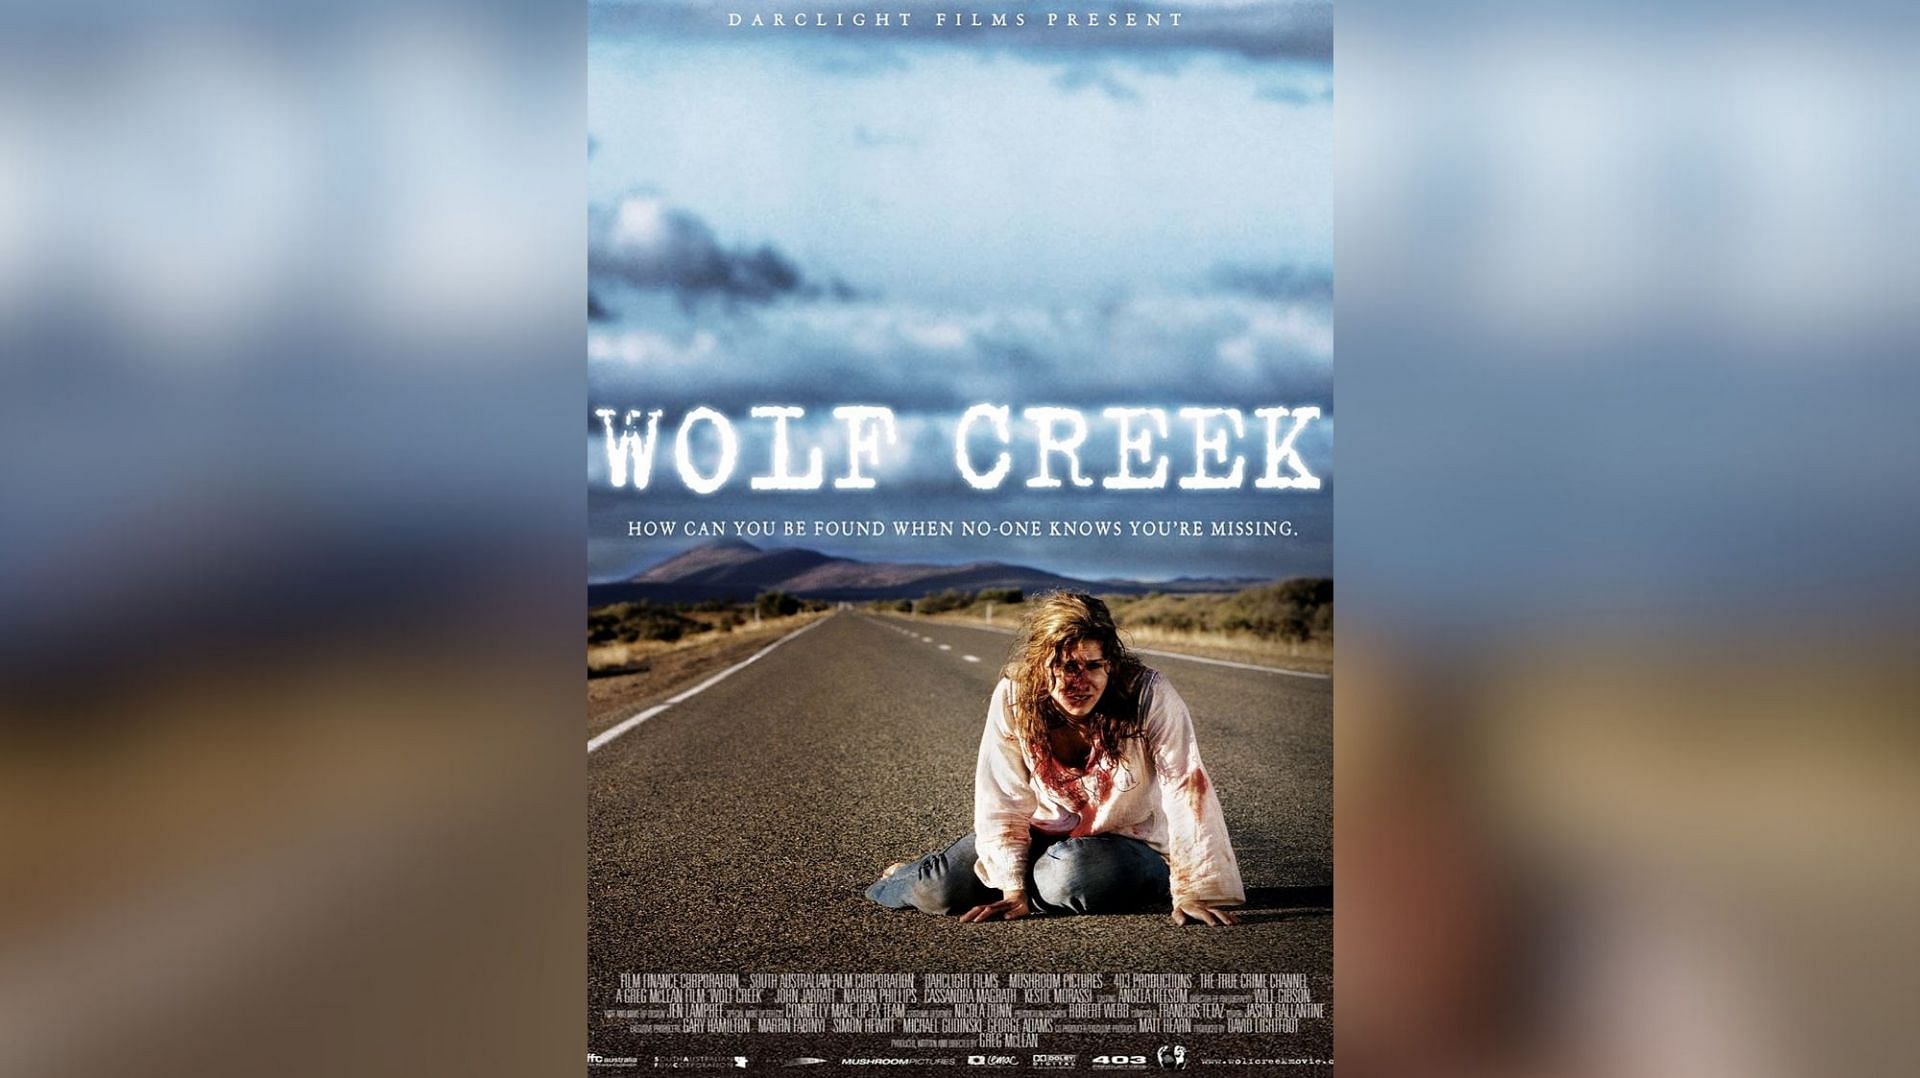 Wolf Creek (Image via Darclight Films)